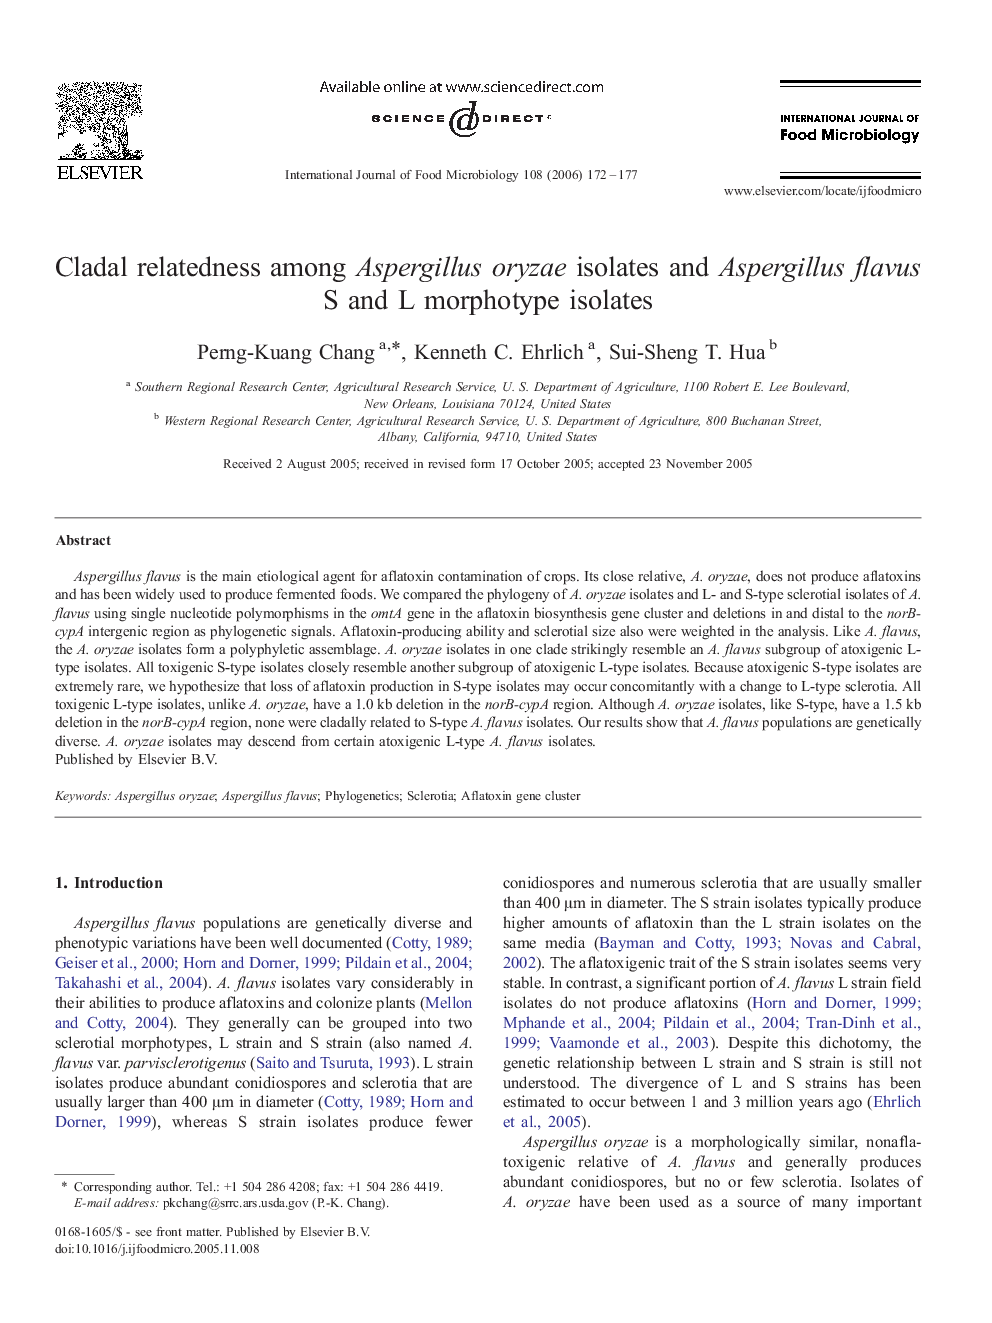 Cladal relatedness among Aspergillus oryzae isolates and Aspergillus flavus S and L morphotype isolates